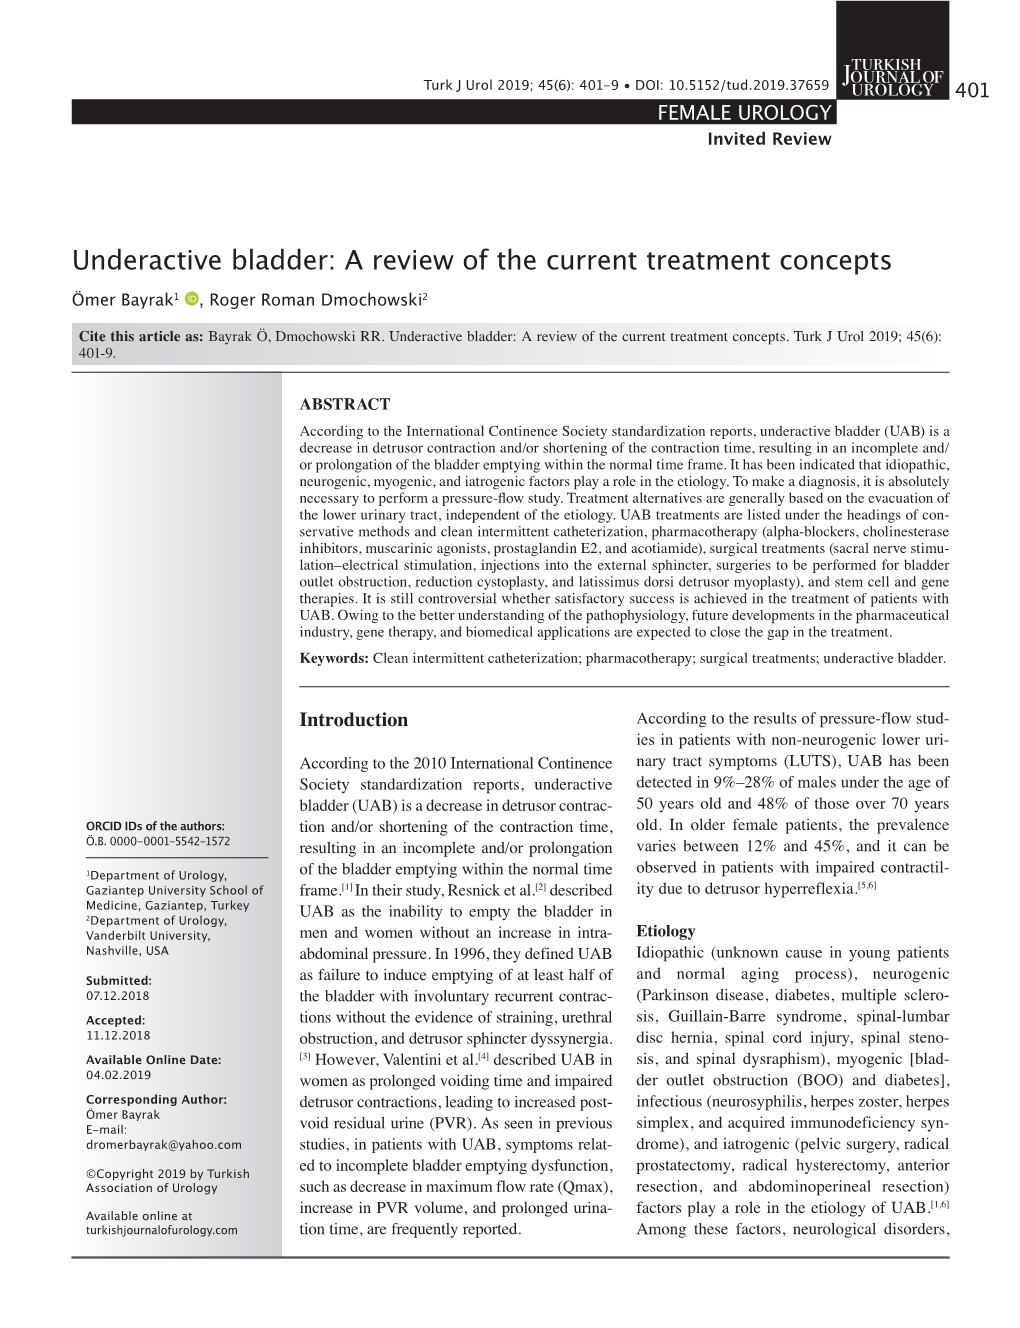 Underactive Bladder: a Review of the Current Treatment Concepts Ömer Bayrak1 , Roger Roman Dmochowski2 Cite This Article As: Bayrak Ö, Dmochowski RR